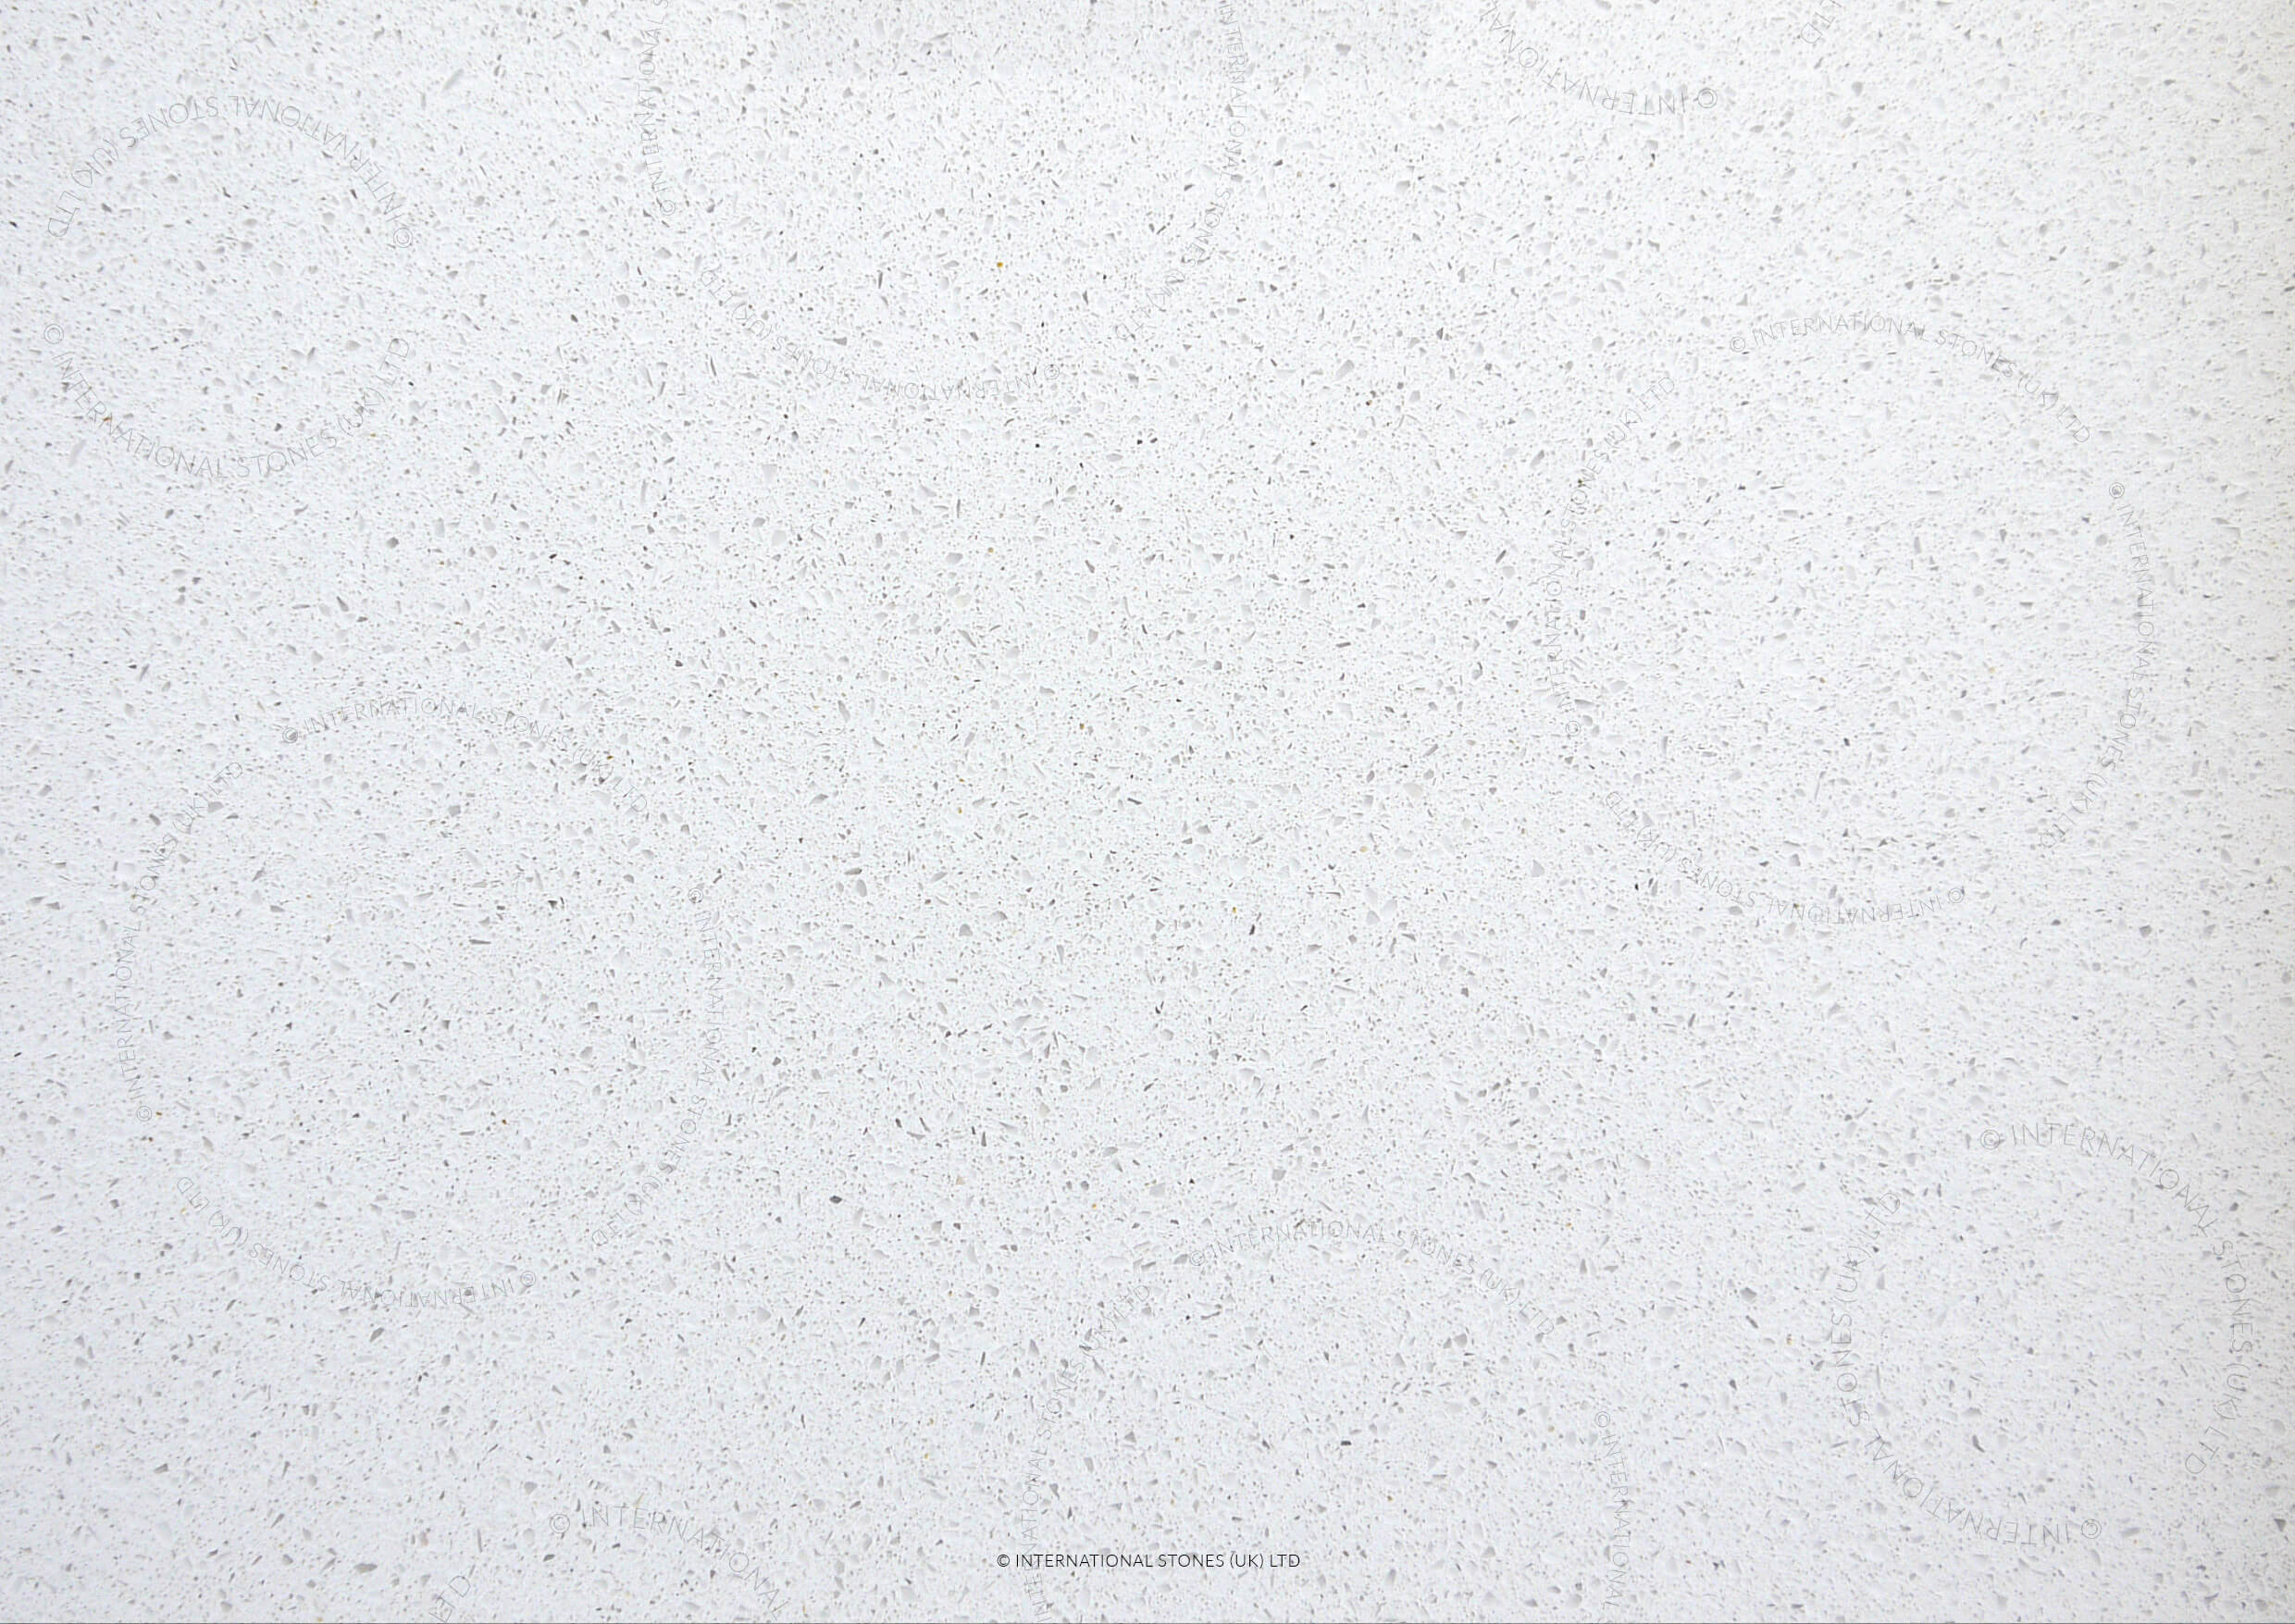 International Stone IQ Blanco Maple - Suffolk - Beccles